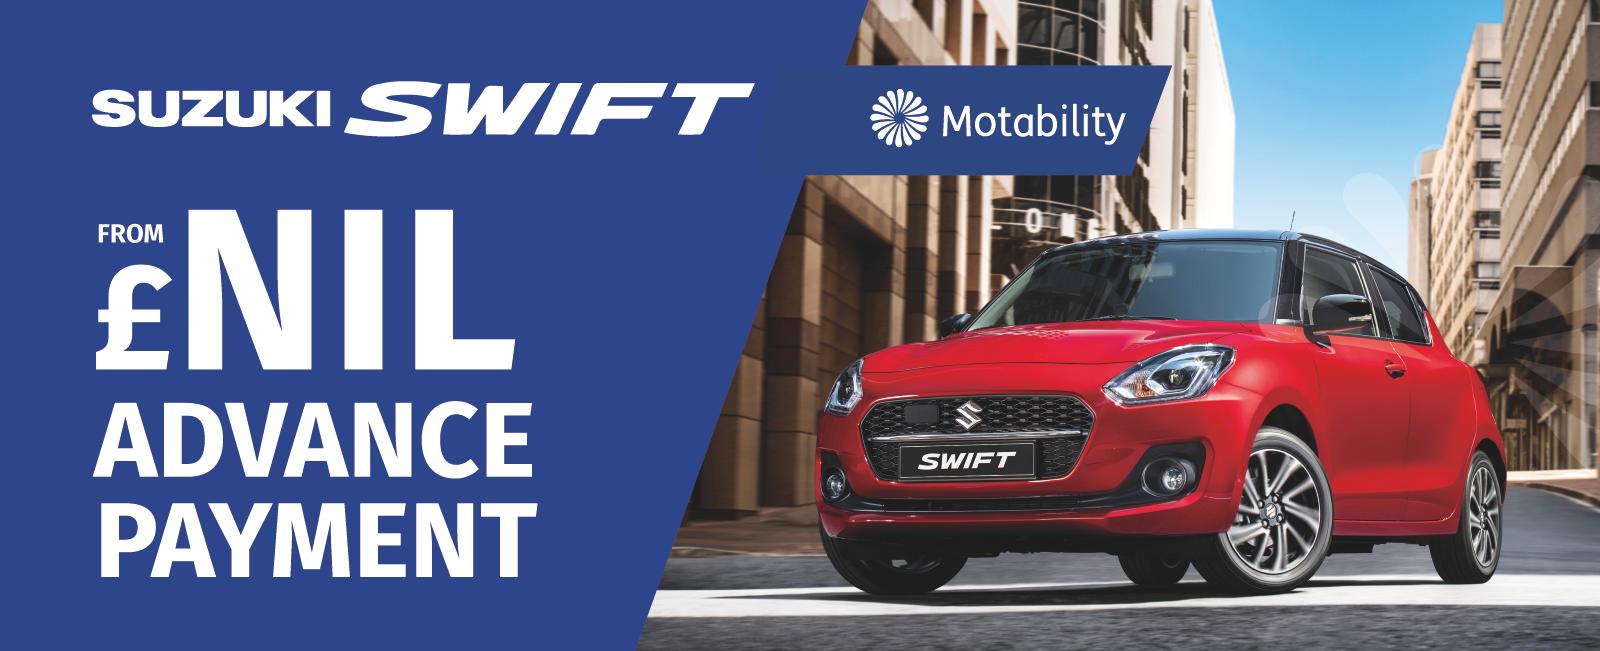 Suzuki Swift From £NIL Advance Payment on the Motability Scheme